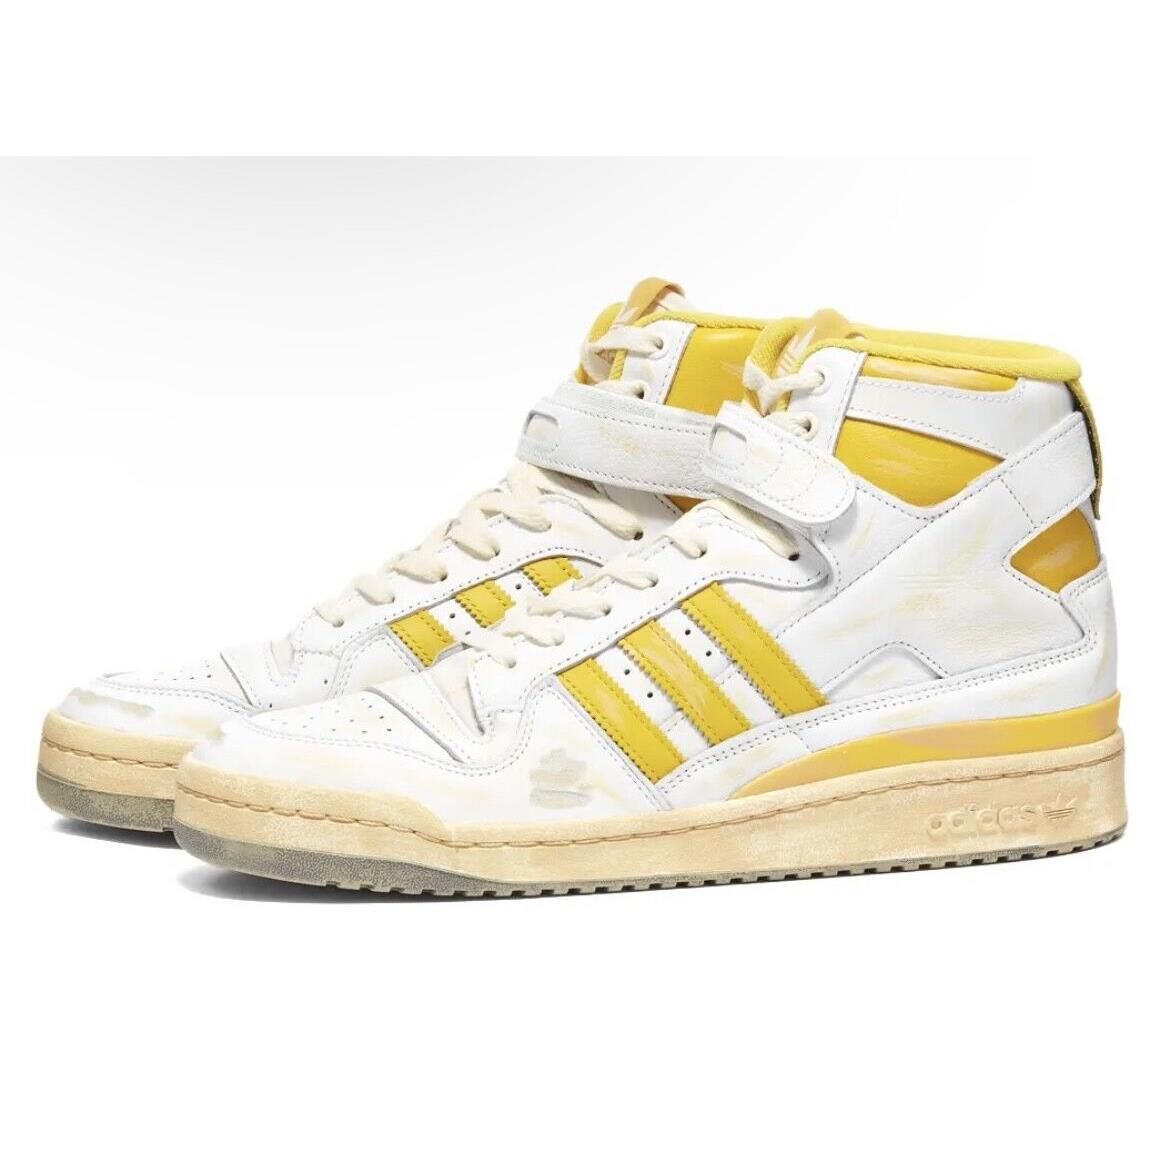 Adidas Forum 84 Hi Aec Men Sz 10-11.5 Casual Retro Shoe White Yellow Sneaker